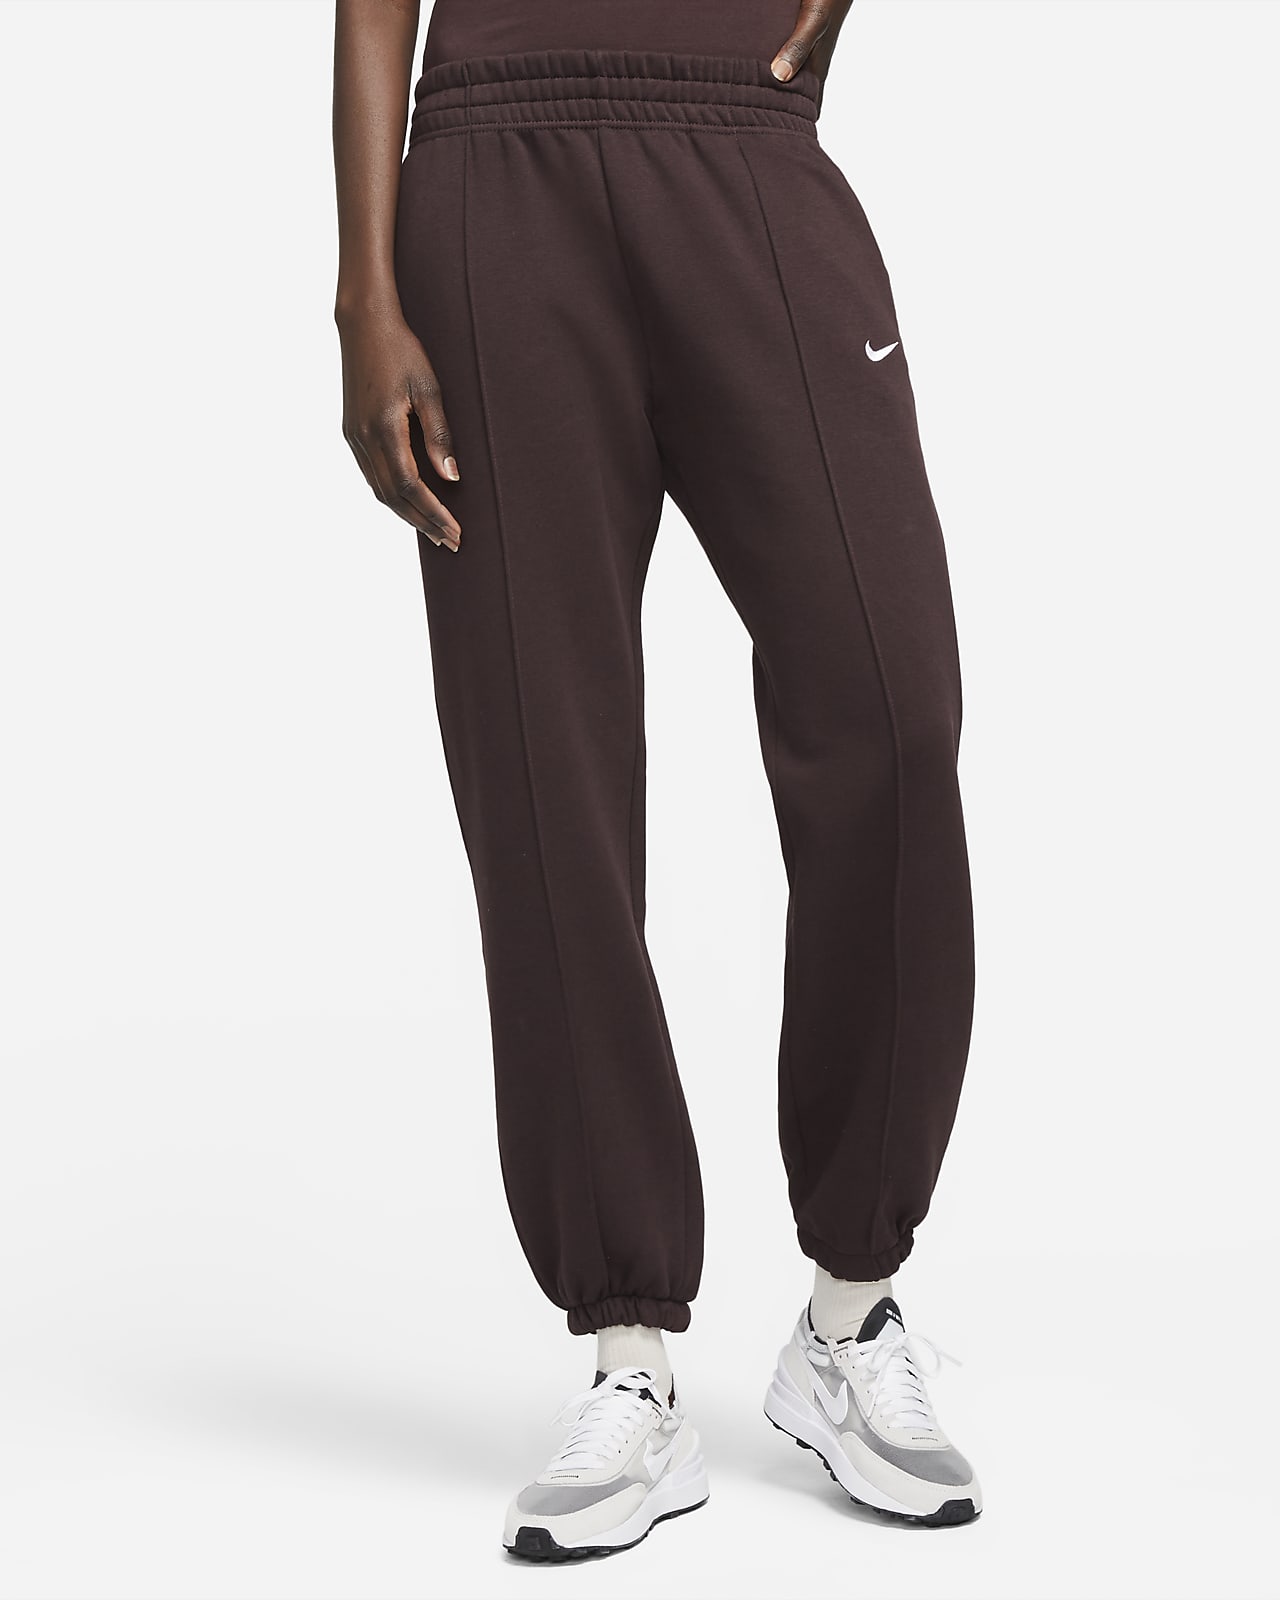 Pantalones de tejido Fleece para mujer Nike Sportswear Essential Collection